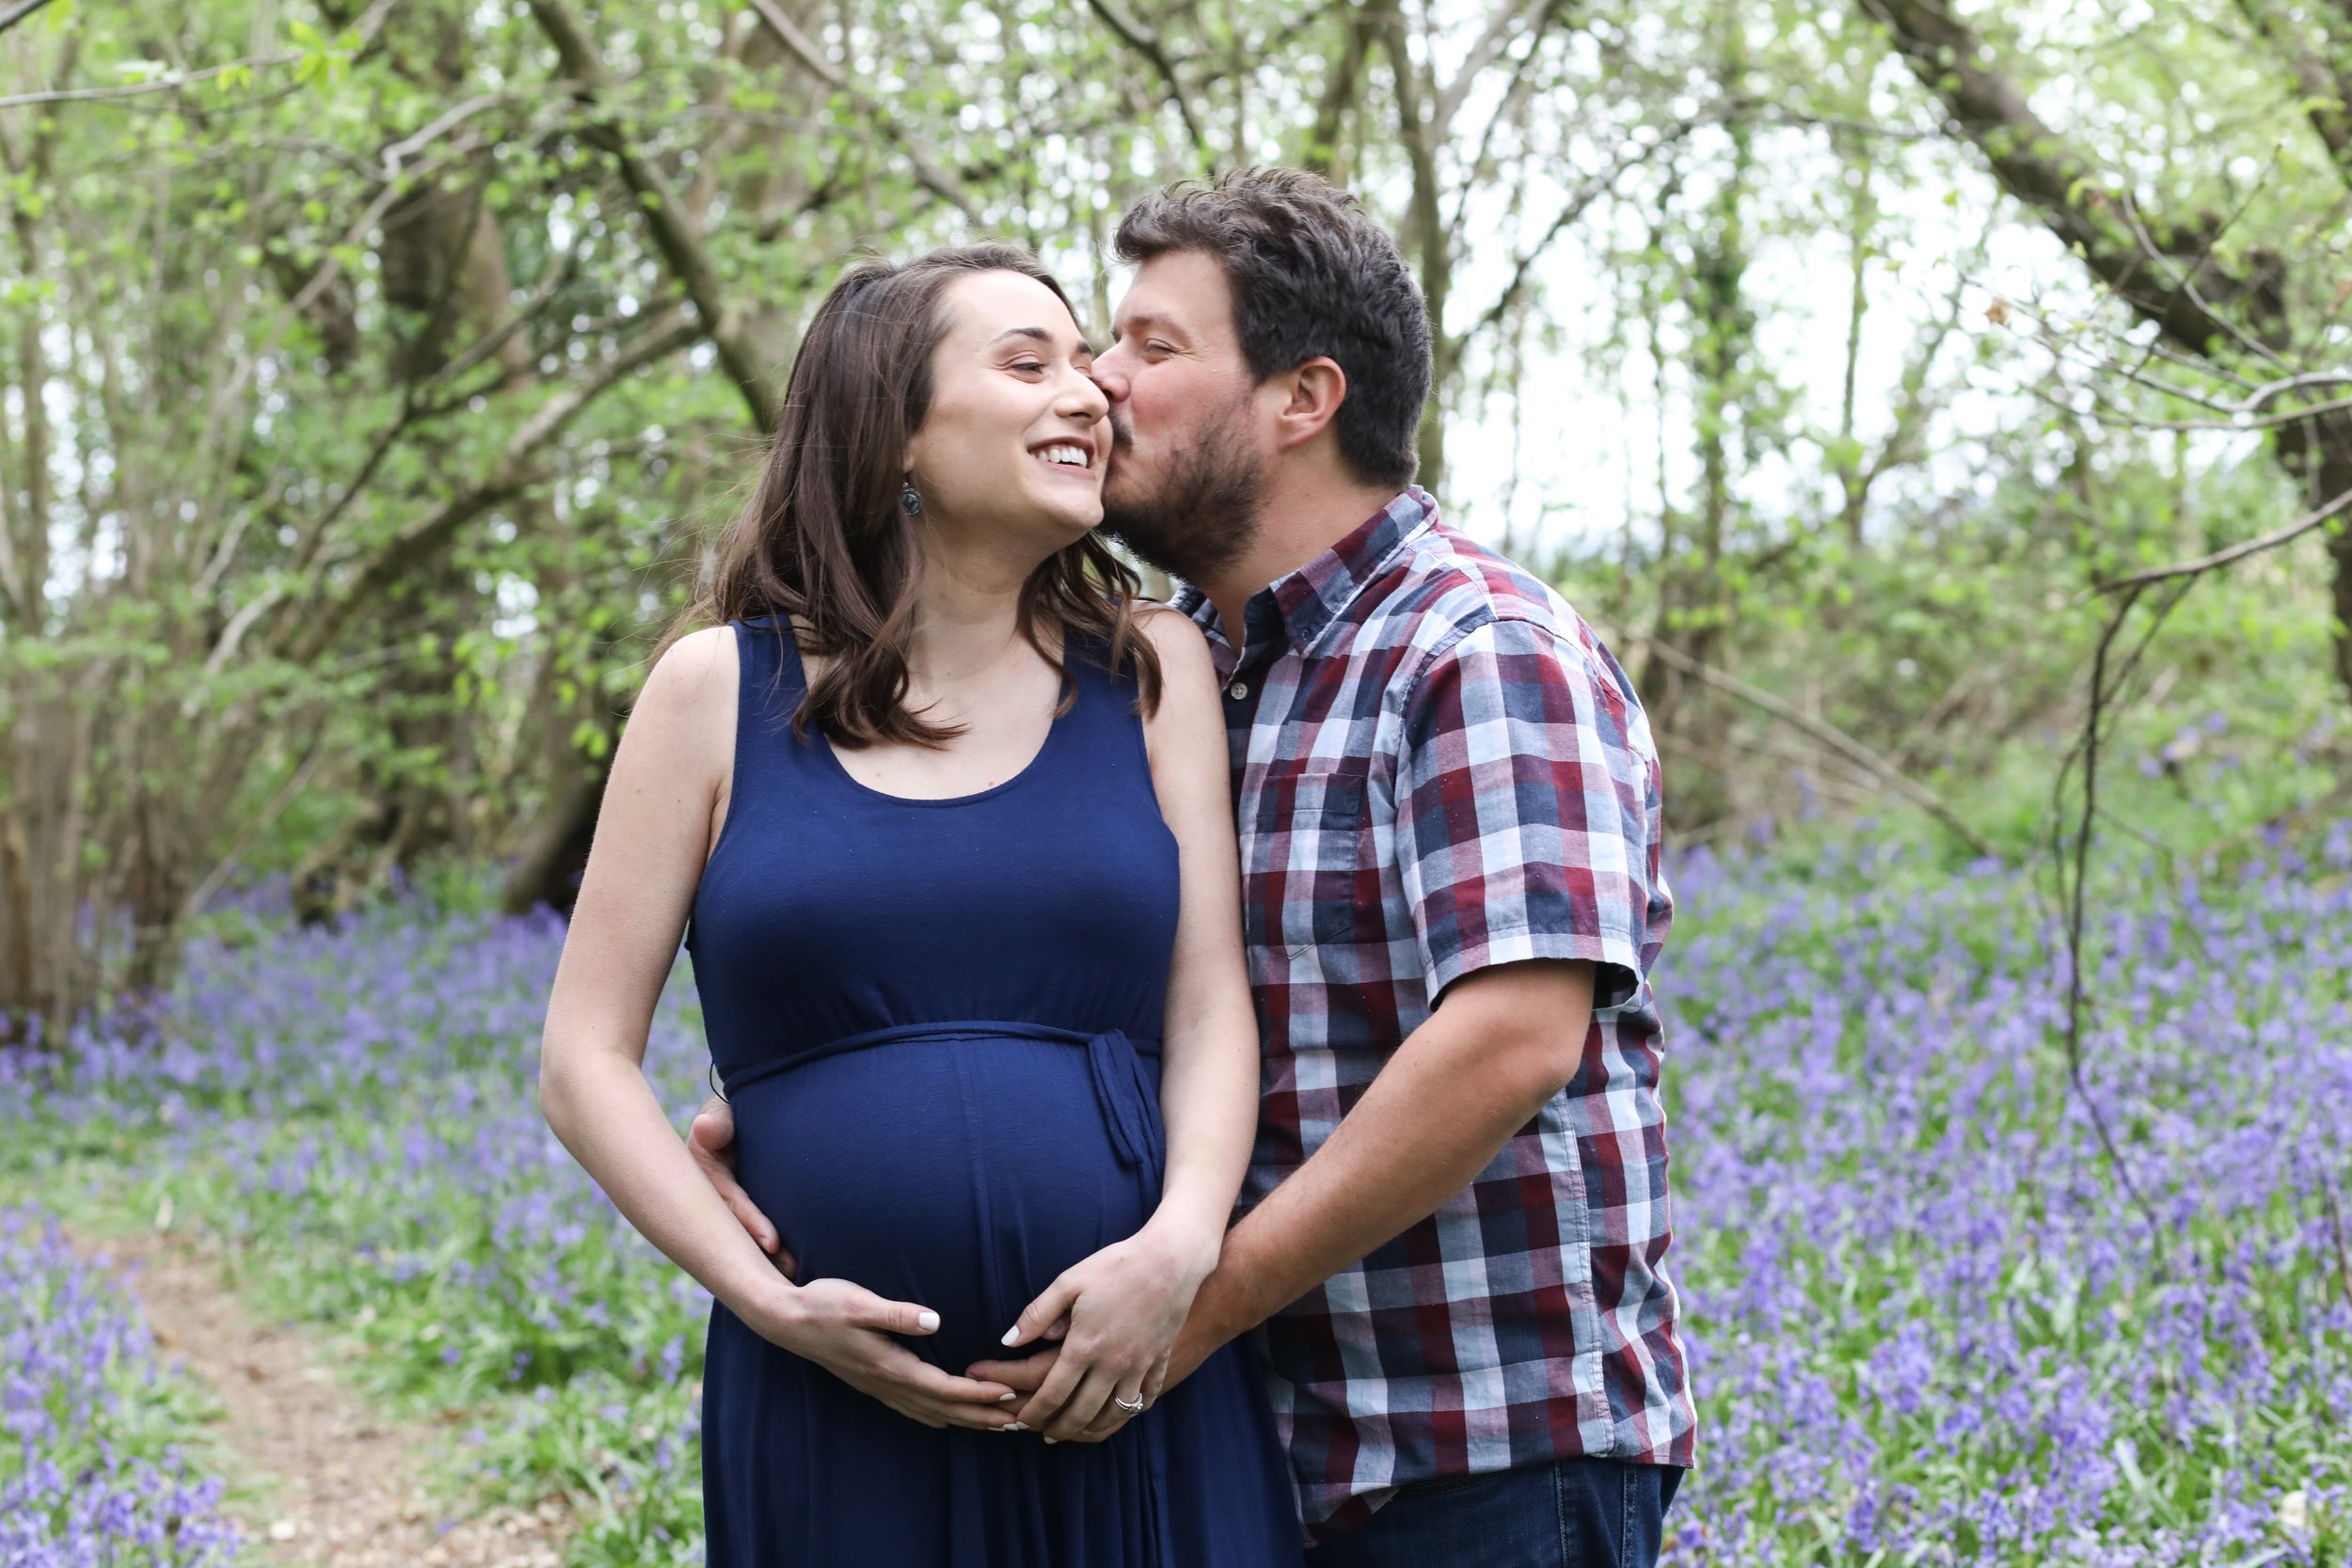 Maternity photo shoot in Berkshire | Bluebell pregnancy photos with Sarah & Bob102 choice .JPG